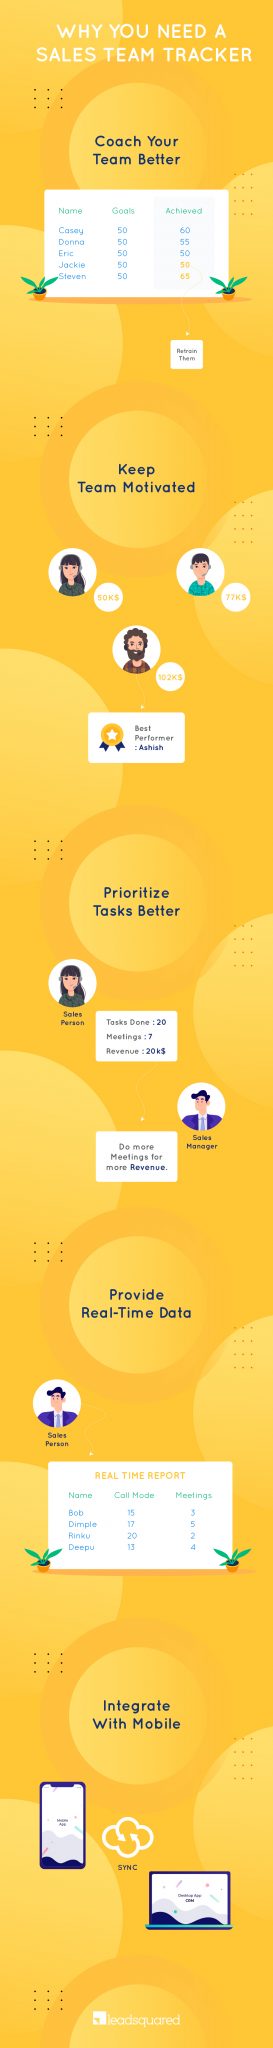 sales team tracker - infographic